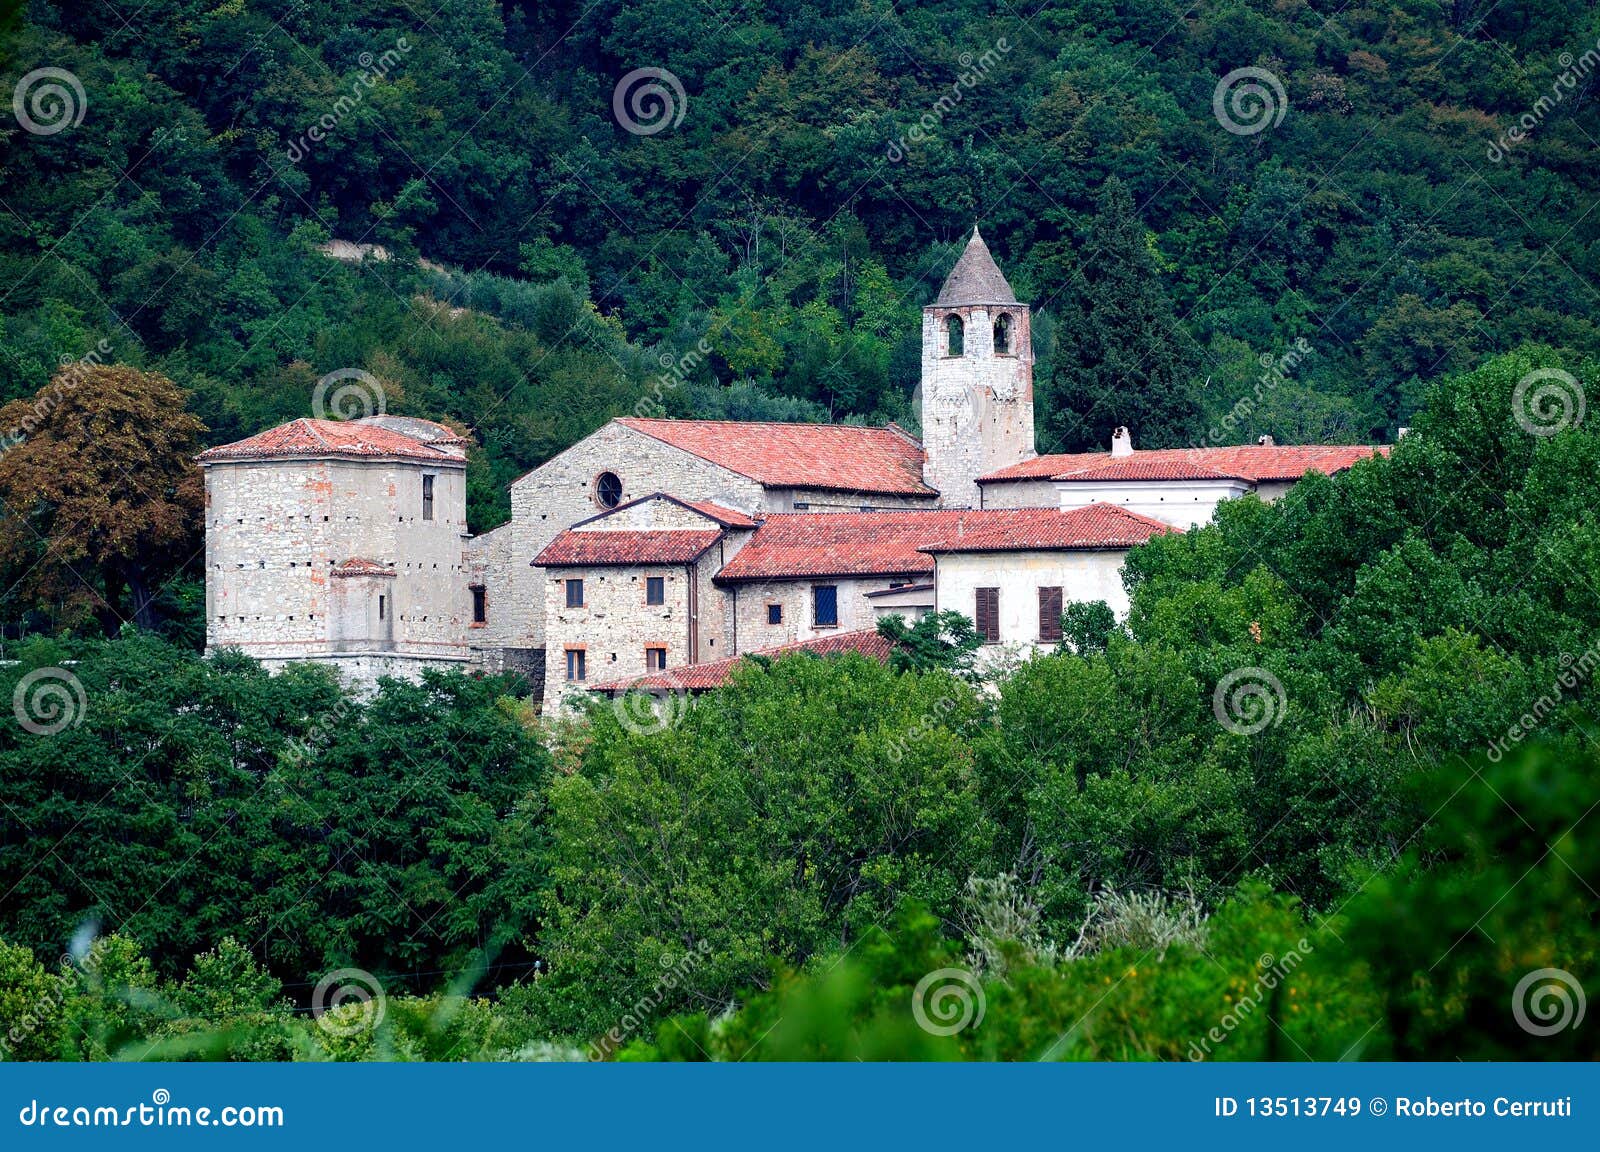 the monastery of san pietro in lamosa,italy